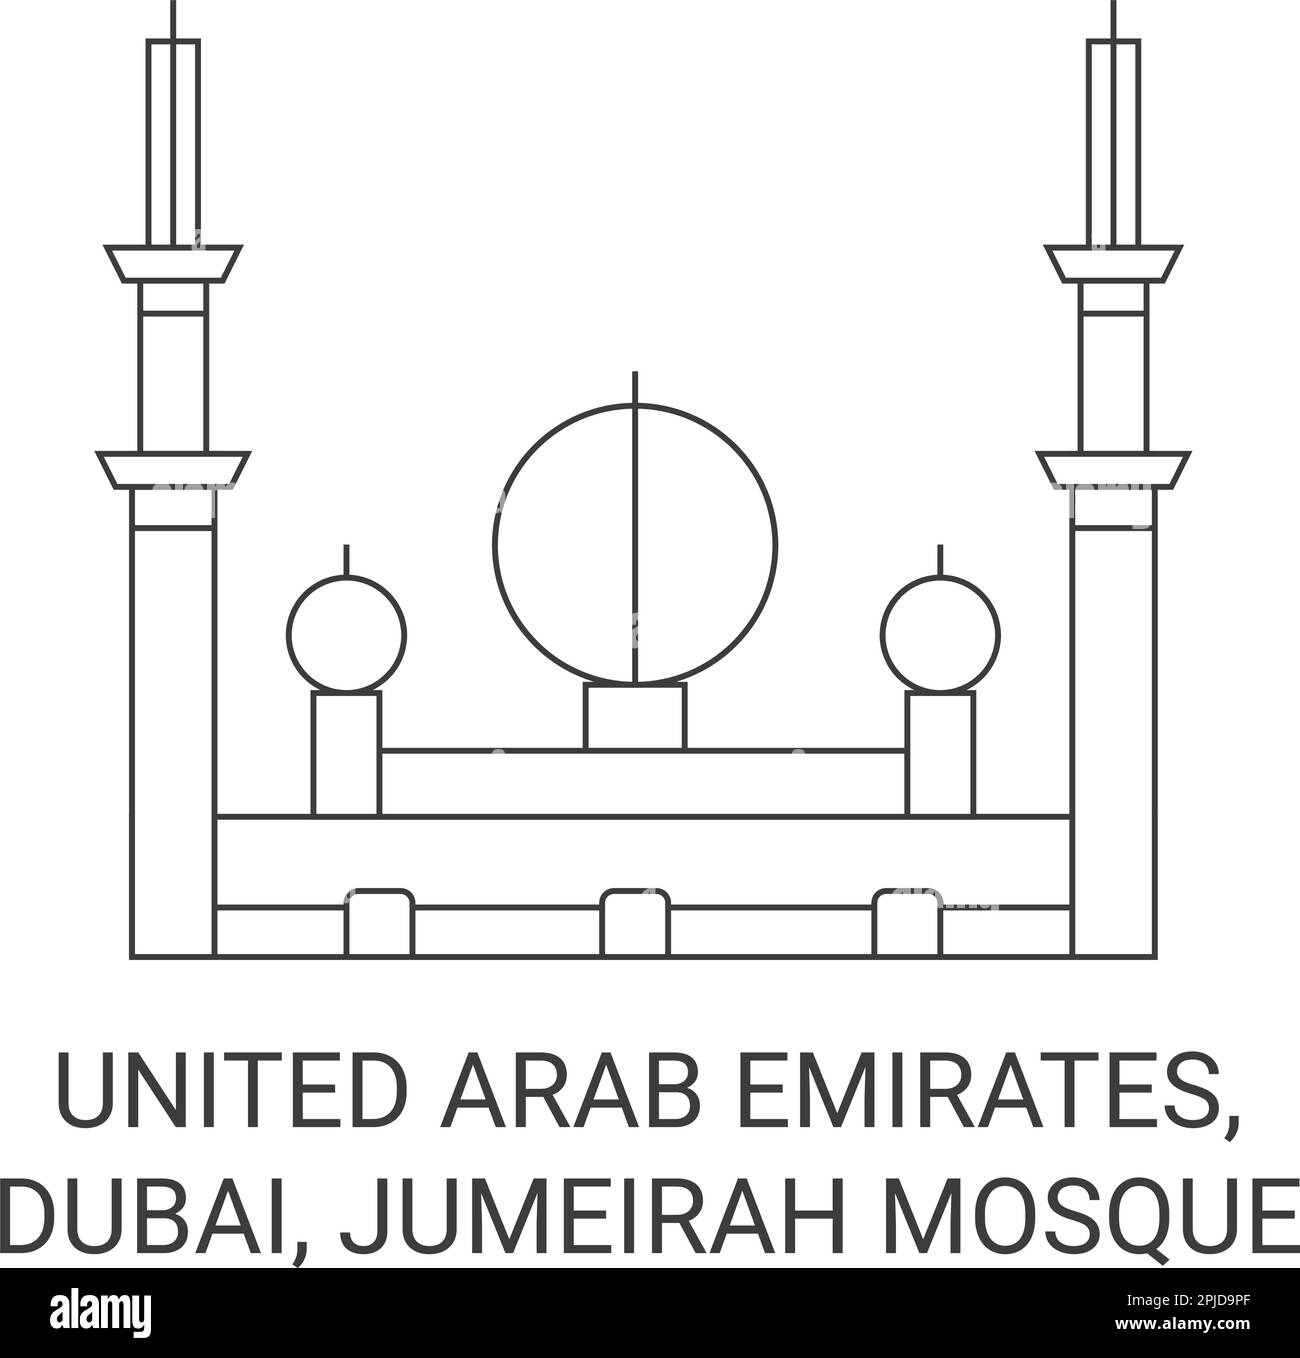 United Arab Emirates, Dubai, Jumeirah Mosque travel landmark vector illustration Stock Vector